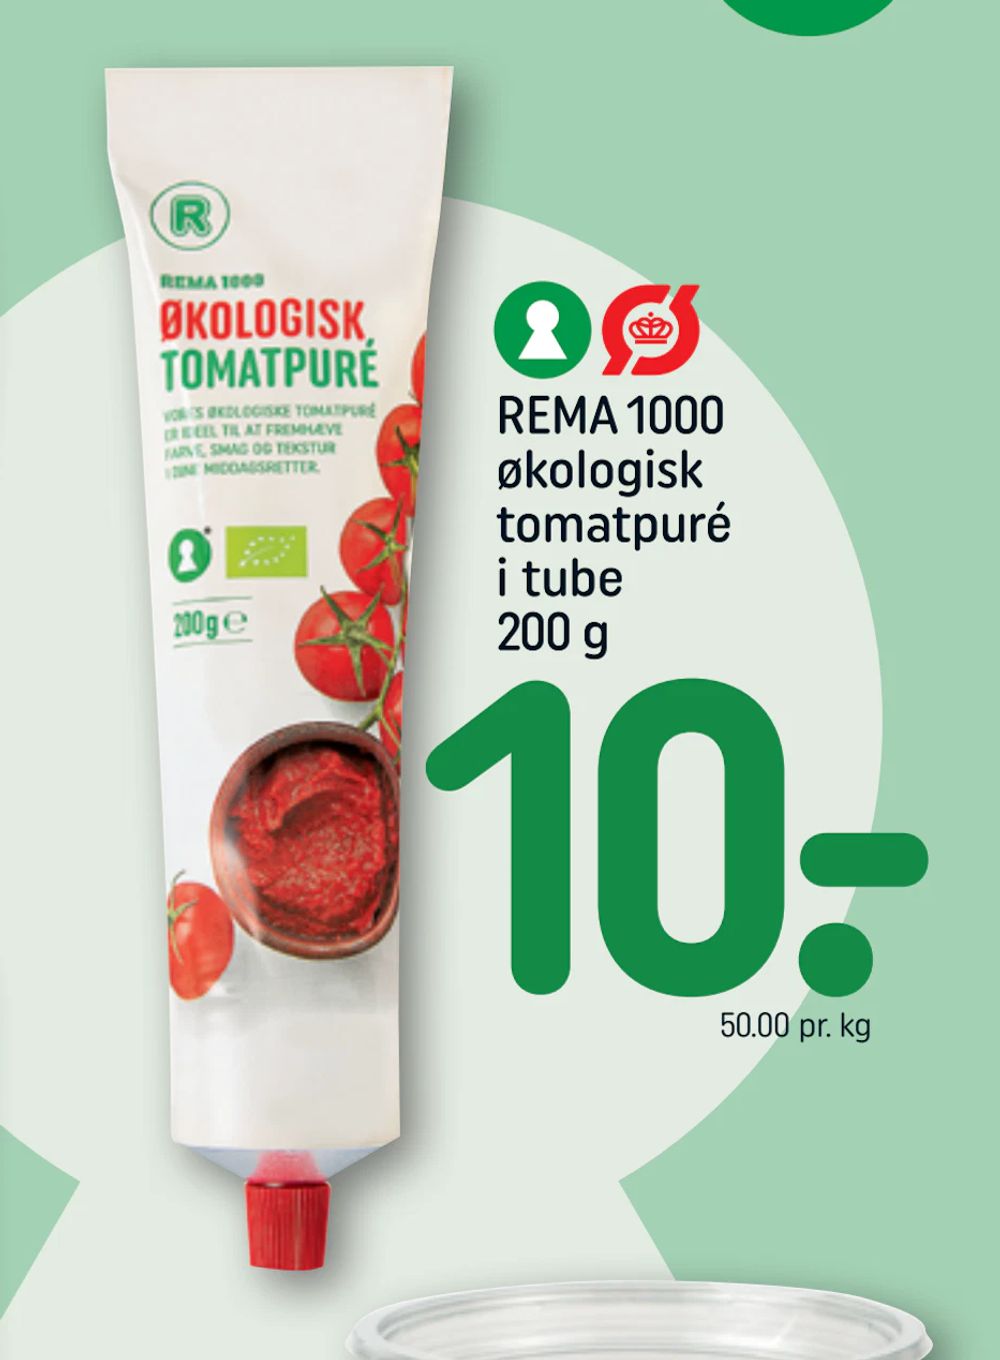 Tilbud på REMA 1000 økologisk tomatpuré i tube 200 g fra REMA 1000 til 10 kr.